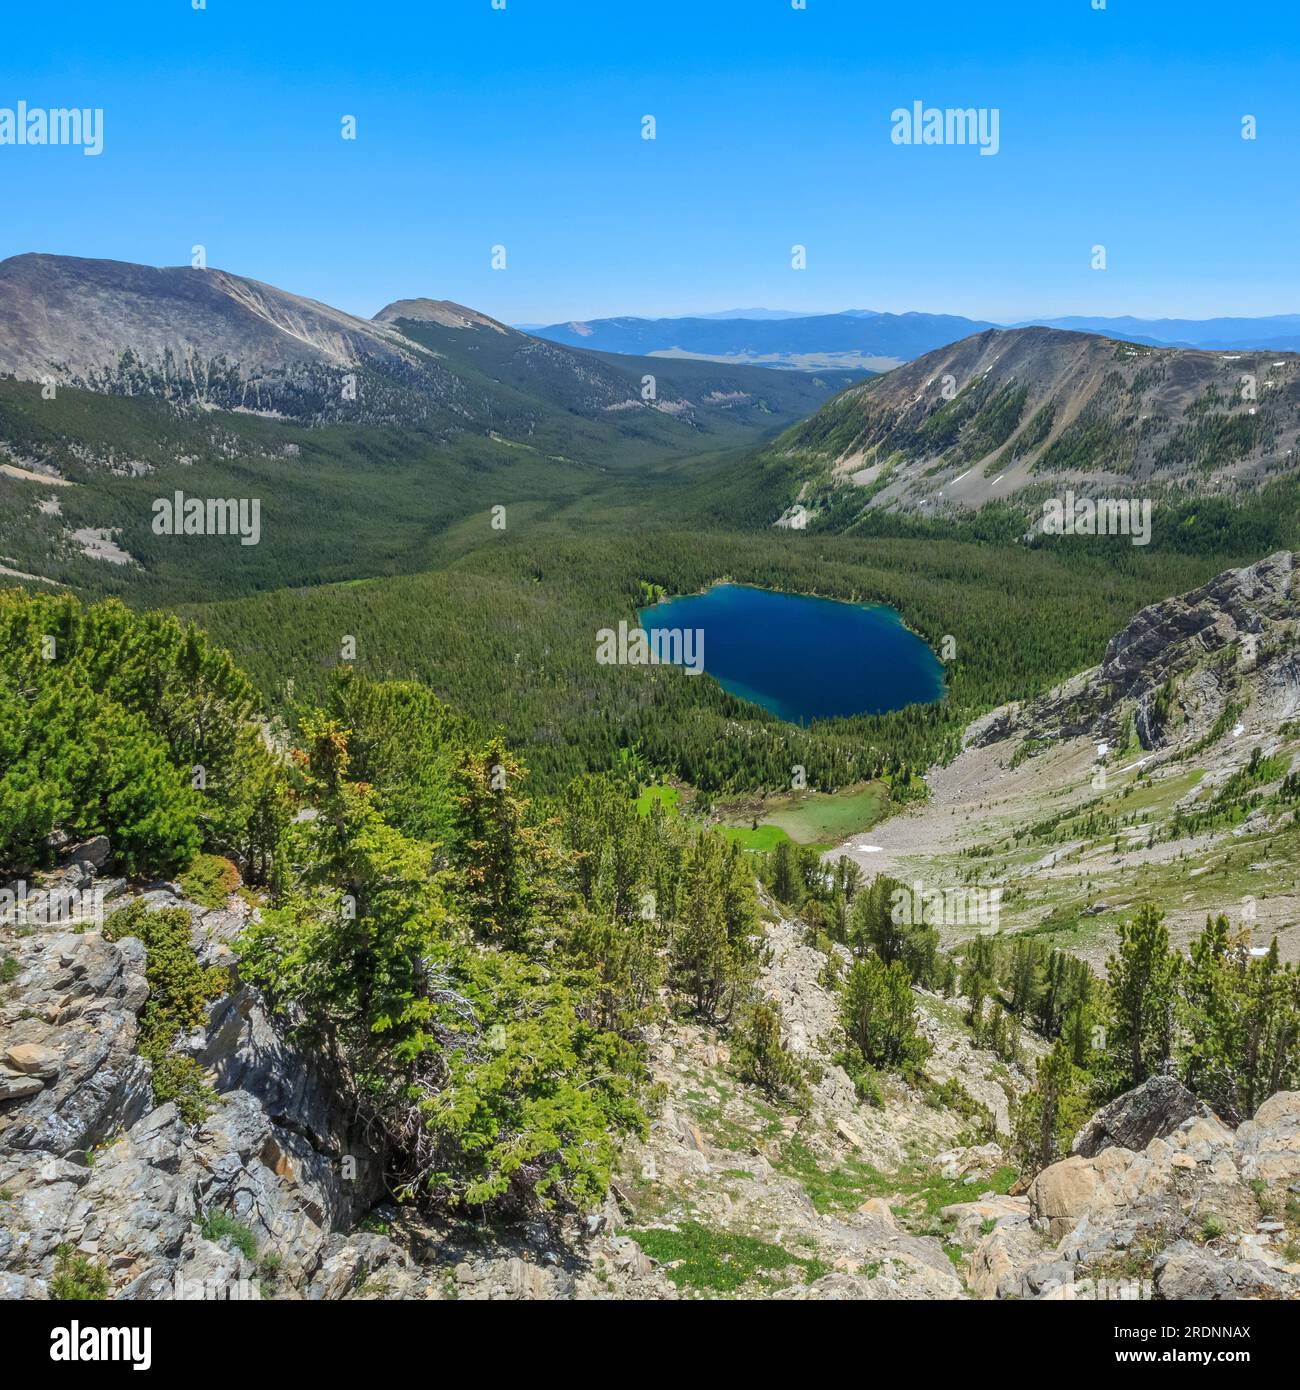 Der obere seymour-See in der Anaconda-Pintler-Wildnis bei Anaconda, montana Stockfoto